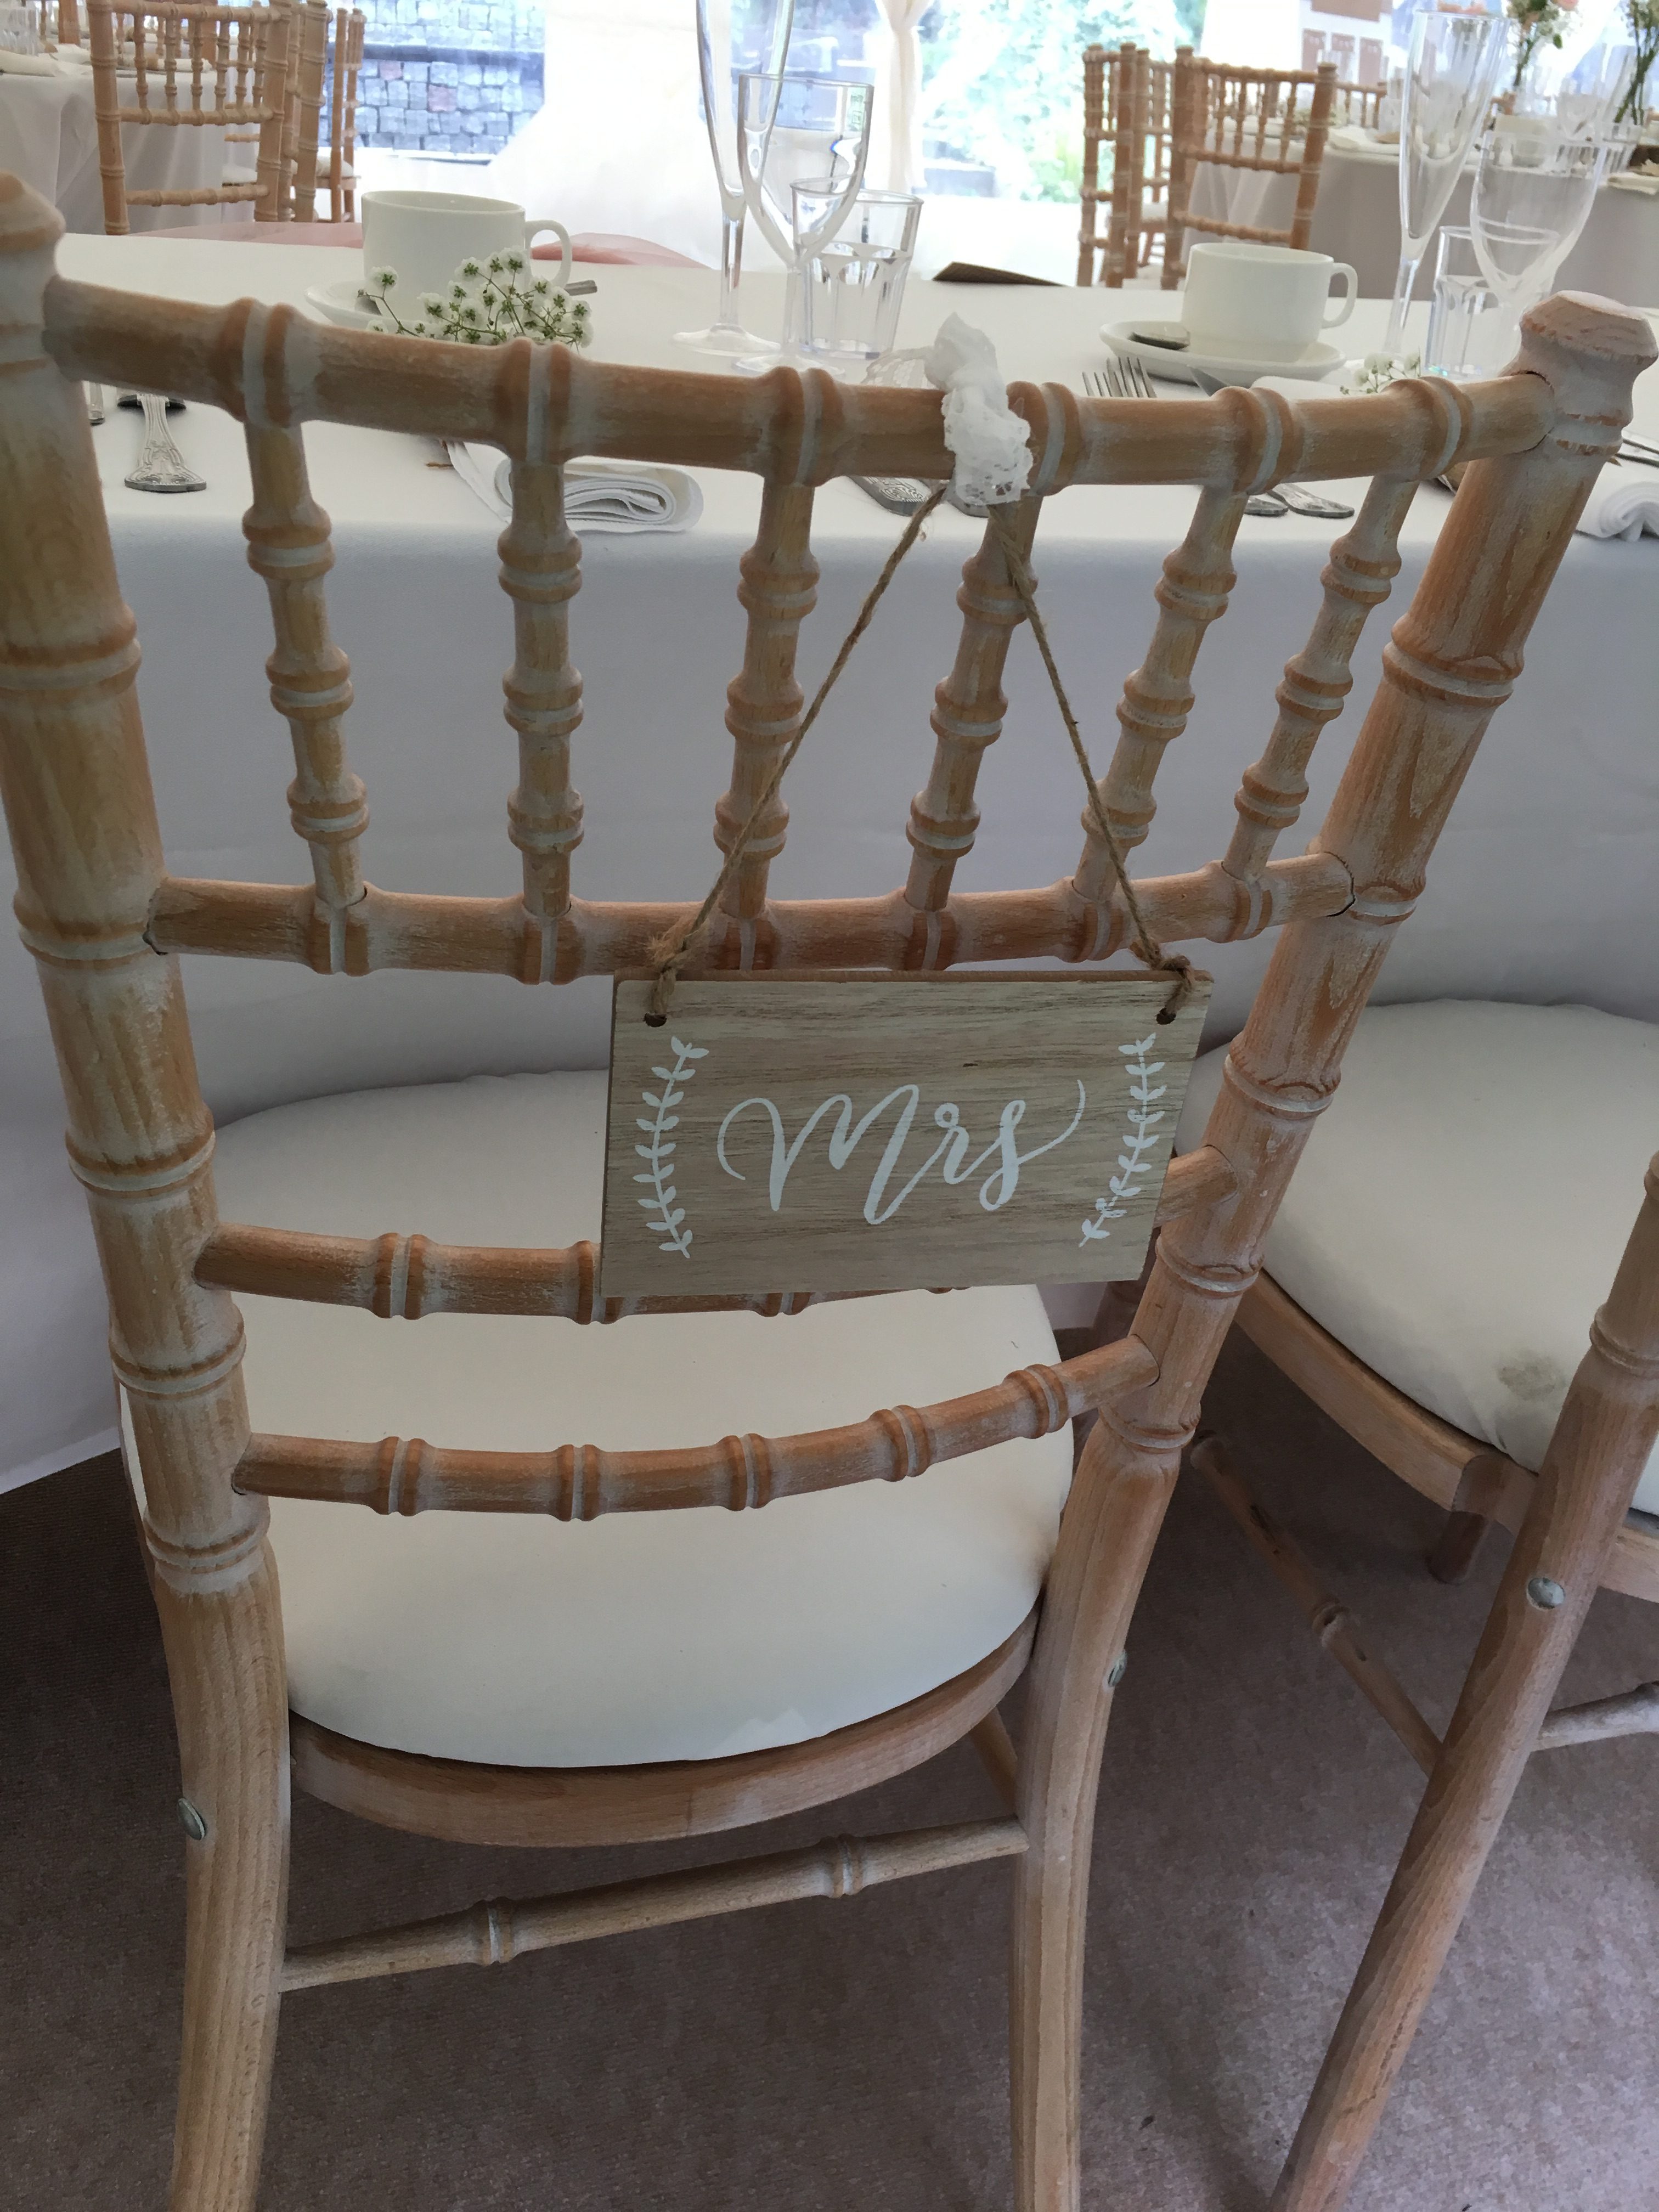 Cream Limewash Chiavari Chairs - Mr & Mrs Chair Signs Sophia's Final Touch - Venue Styling - Weddings